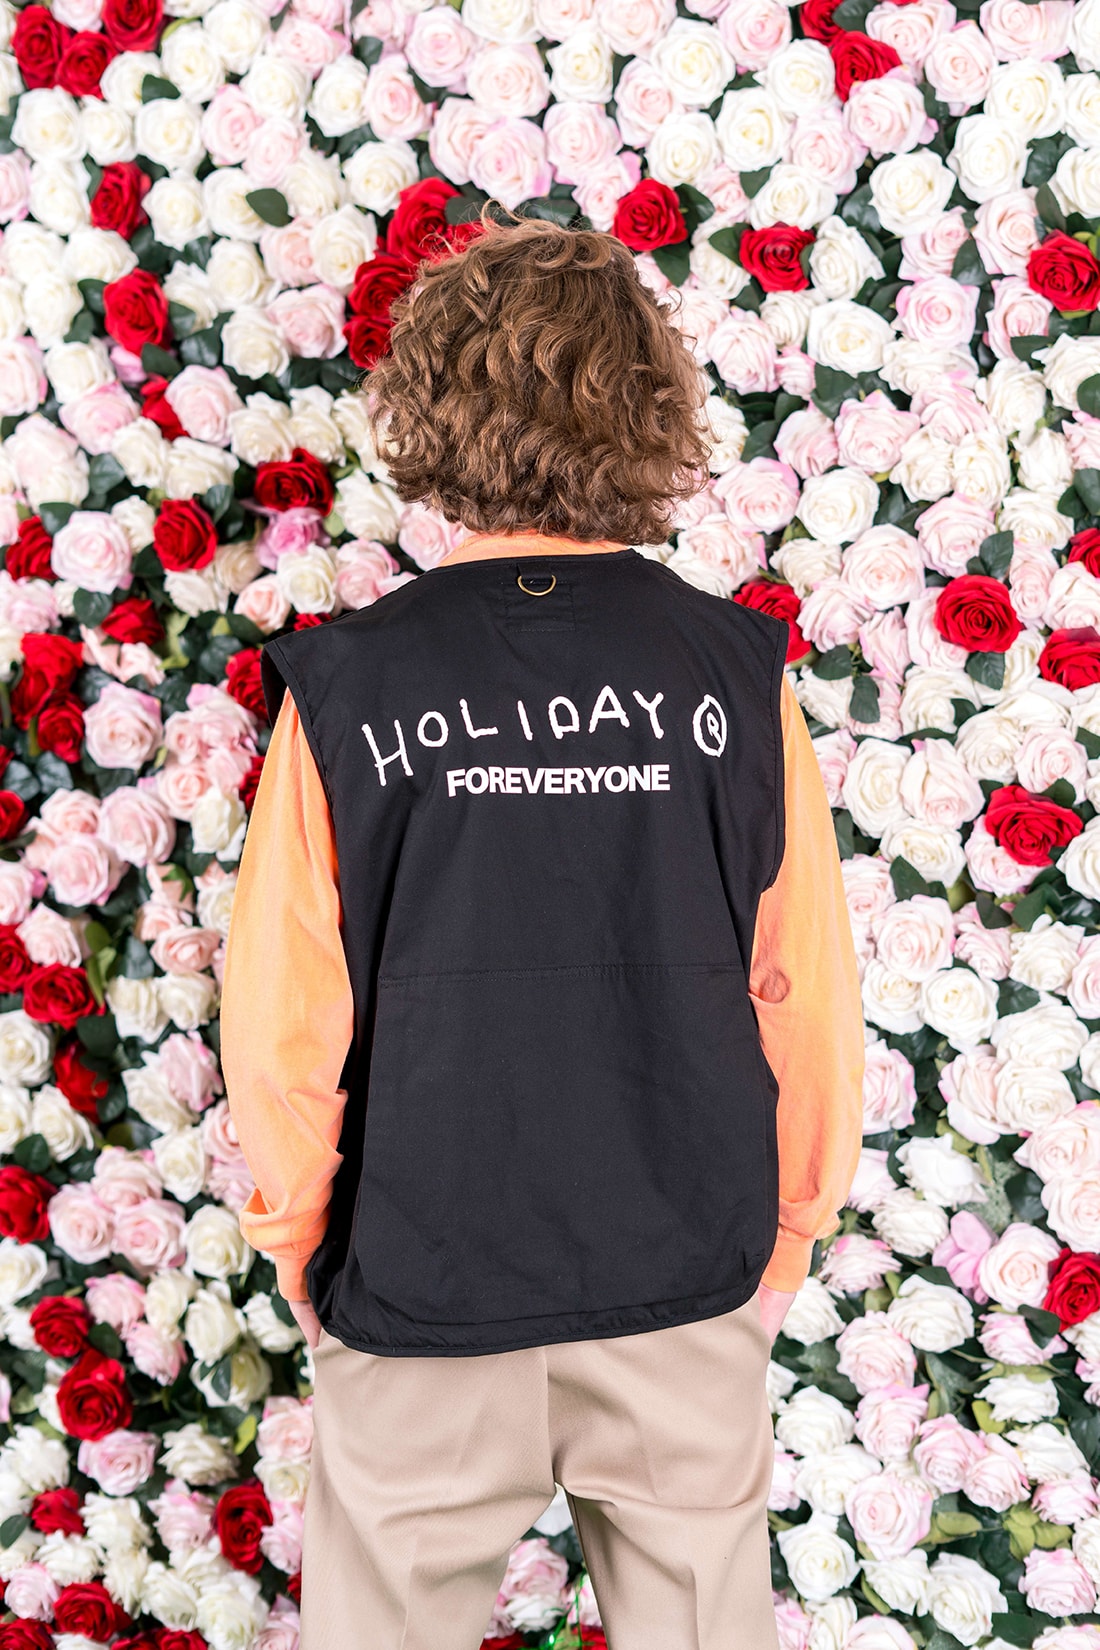 Holiday Brand Spring Summer 2018 Collection Lookbook hoodies T-shirts crewnecks